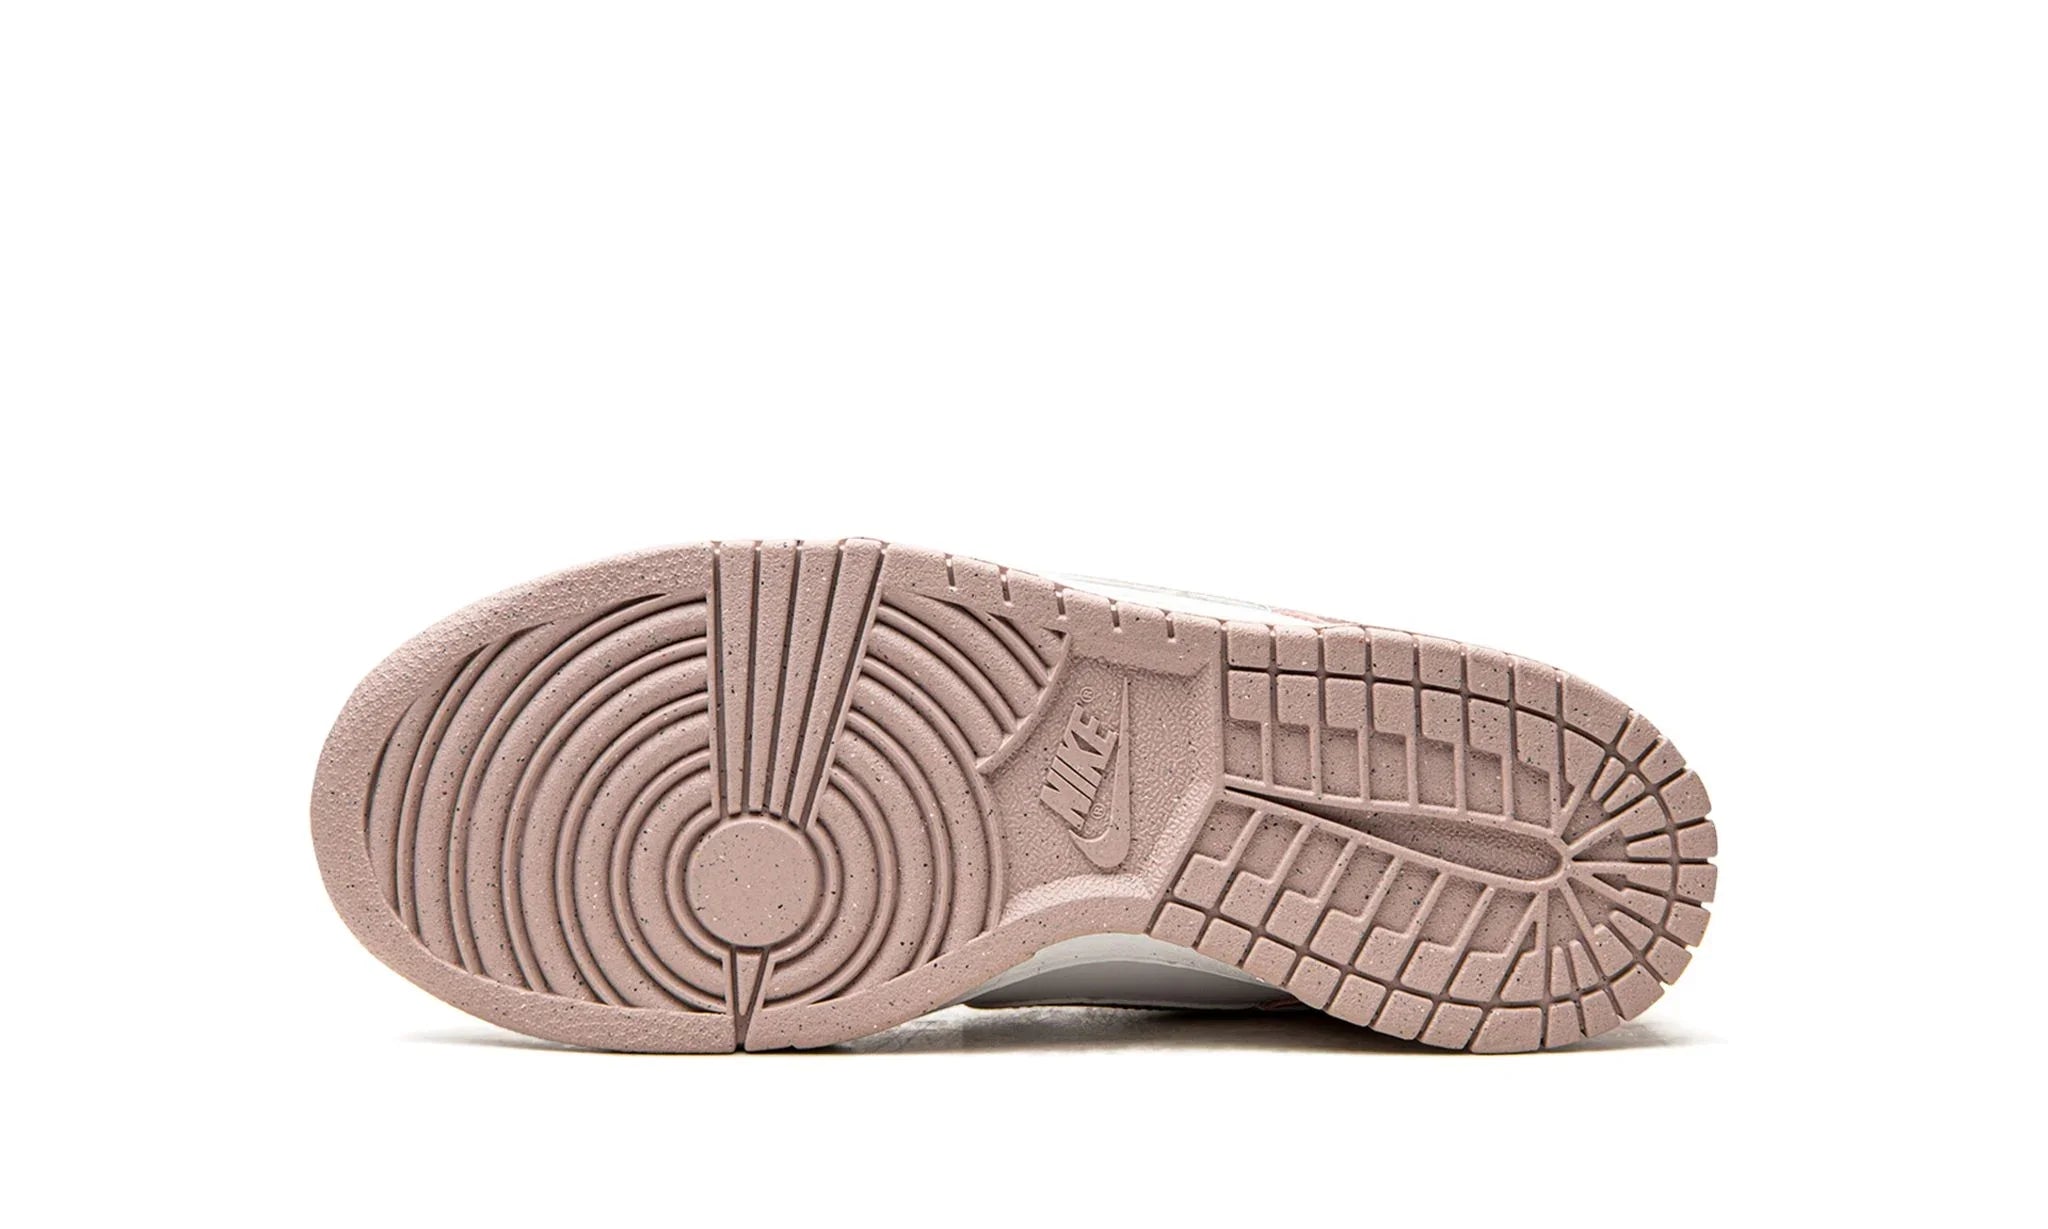 Nike Dunk Low "Pink Velvet" - DO6485-600 - Sneakers